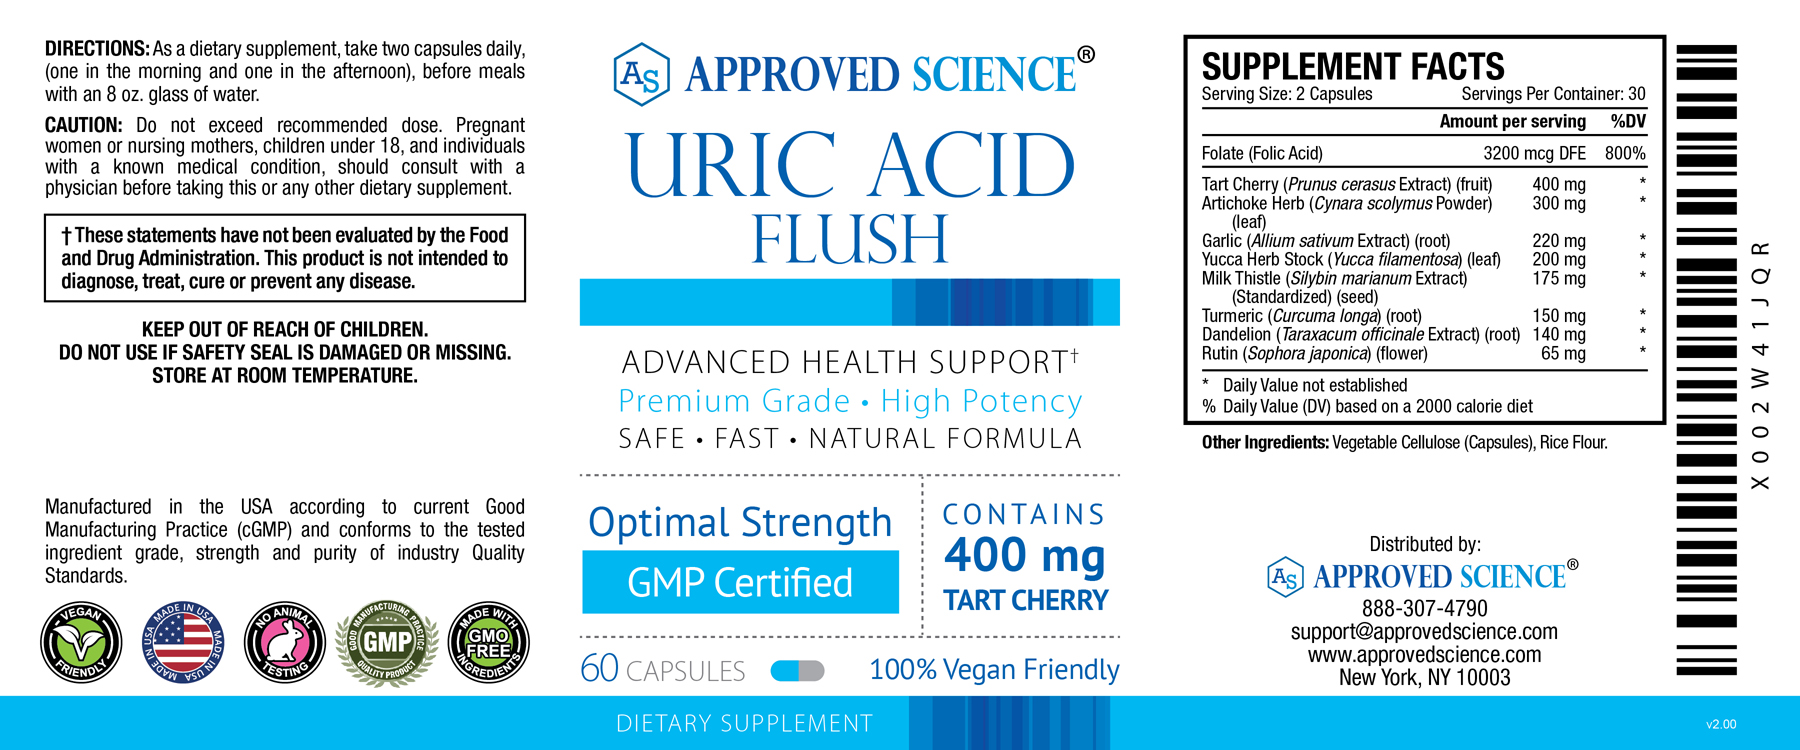 Uric Acid Flush Supplement Facts